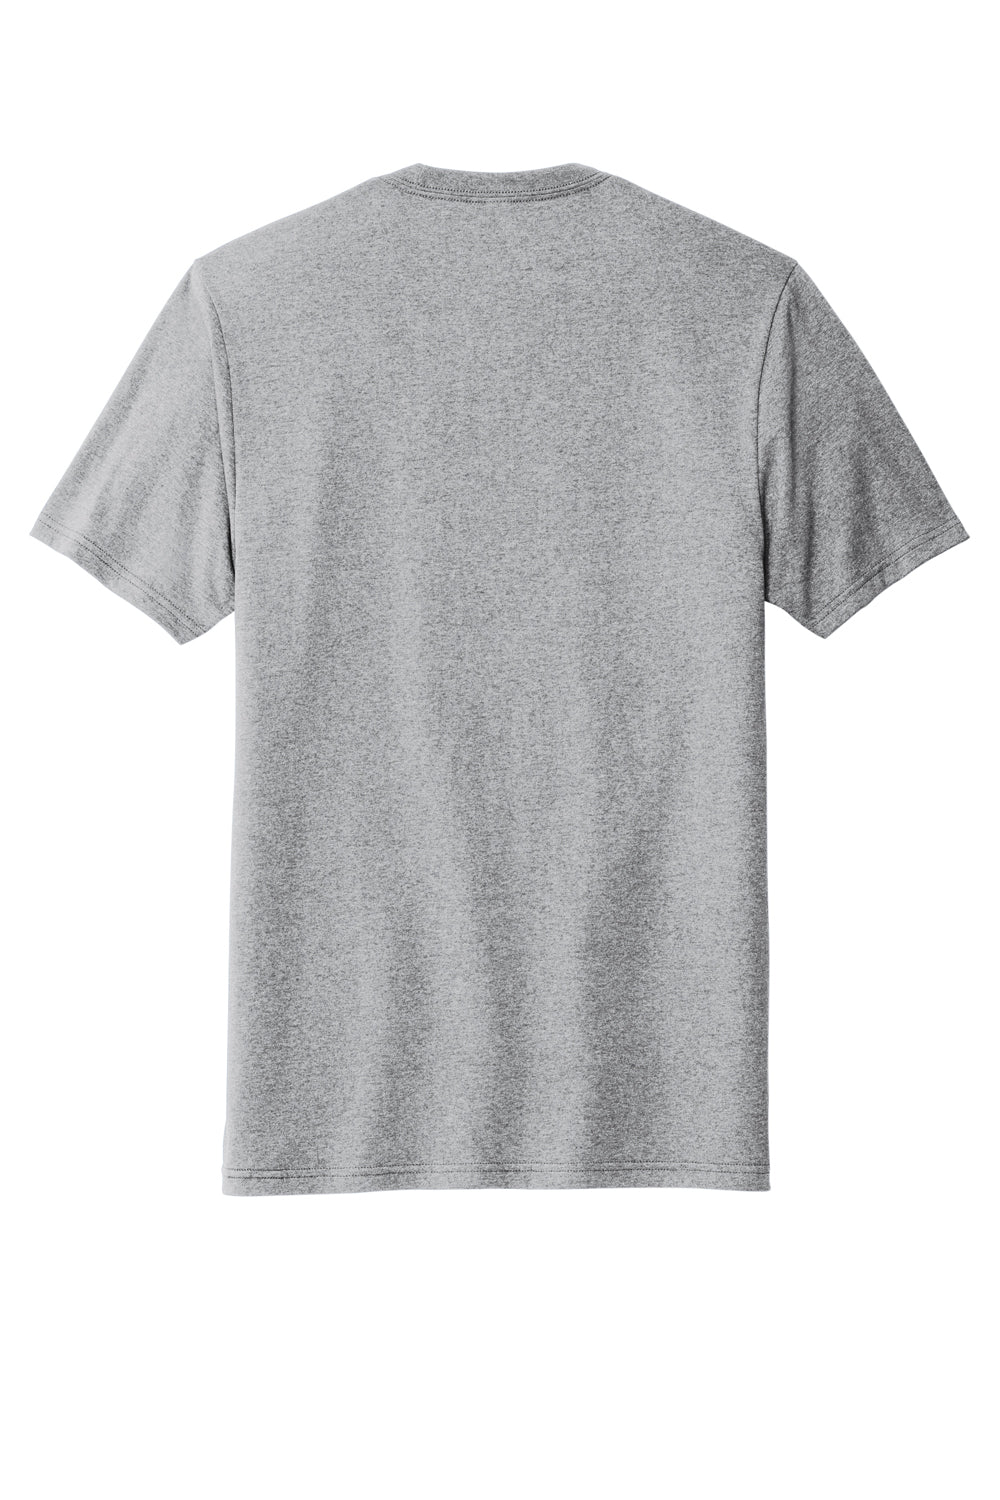 Allmade AL2300 Mens Recycled Short Sleeve Crewneck T-Shirt Heather Remade Grey Flat Back